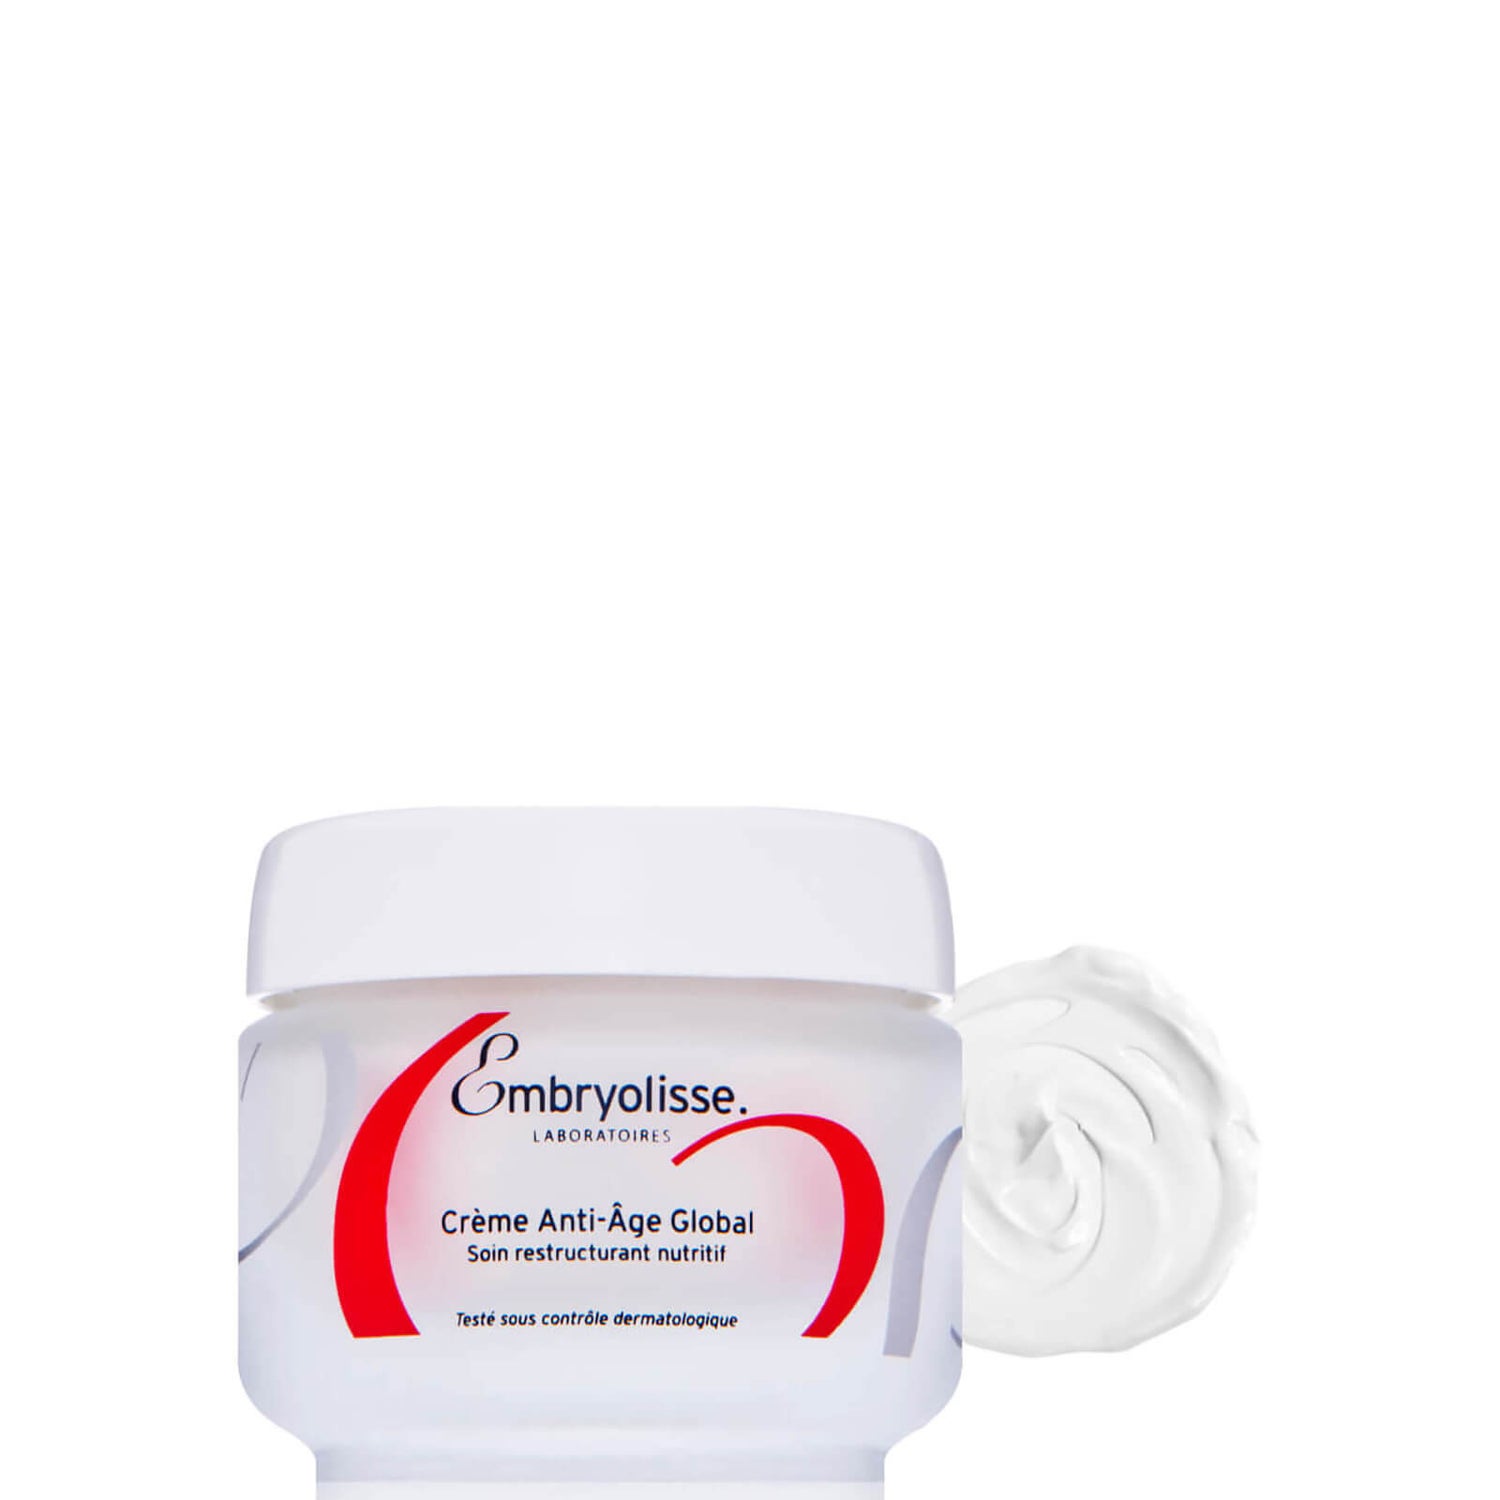 Embryolisse Creme Anti-Age Global - Global Anti-Age Cream (1.69 fl. oz.)